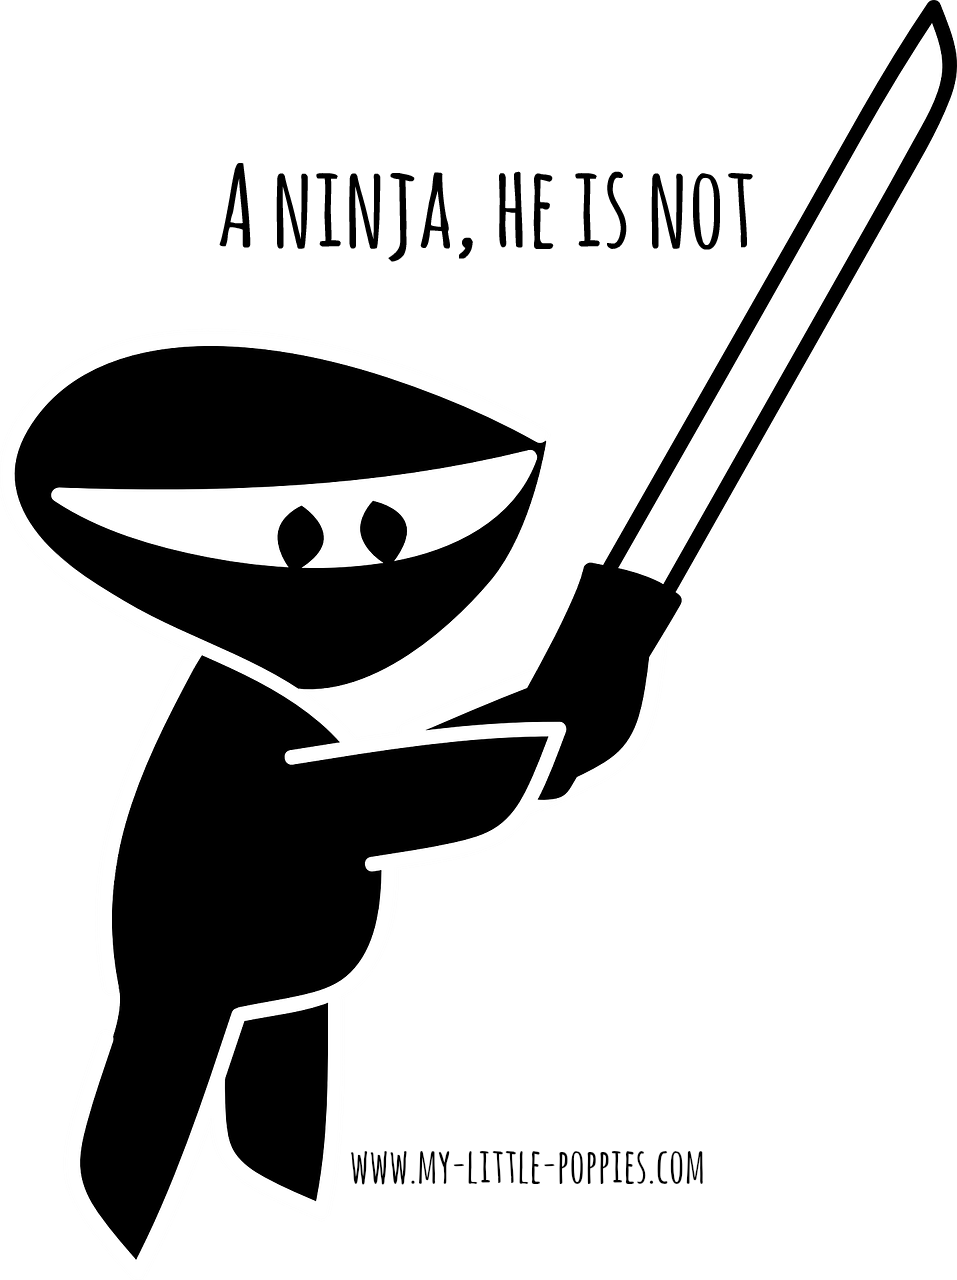 ninja clipart simple cartoon